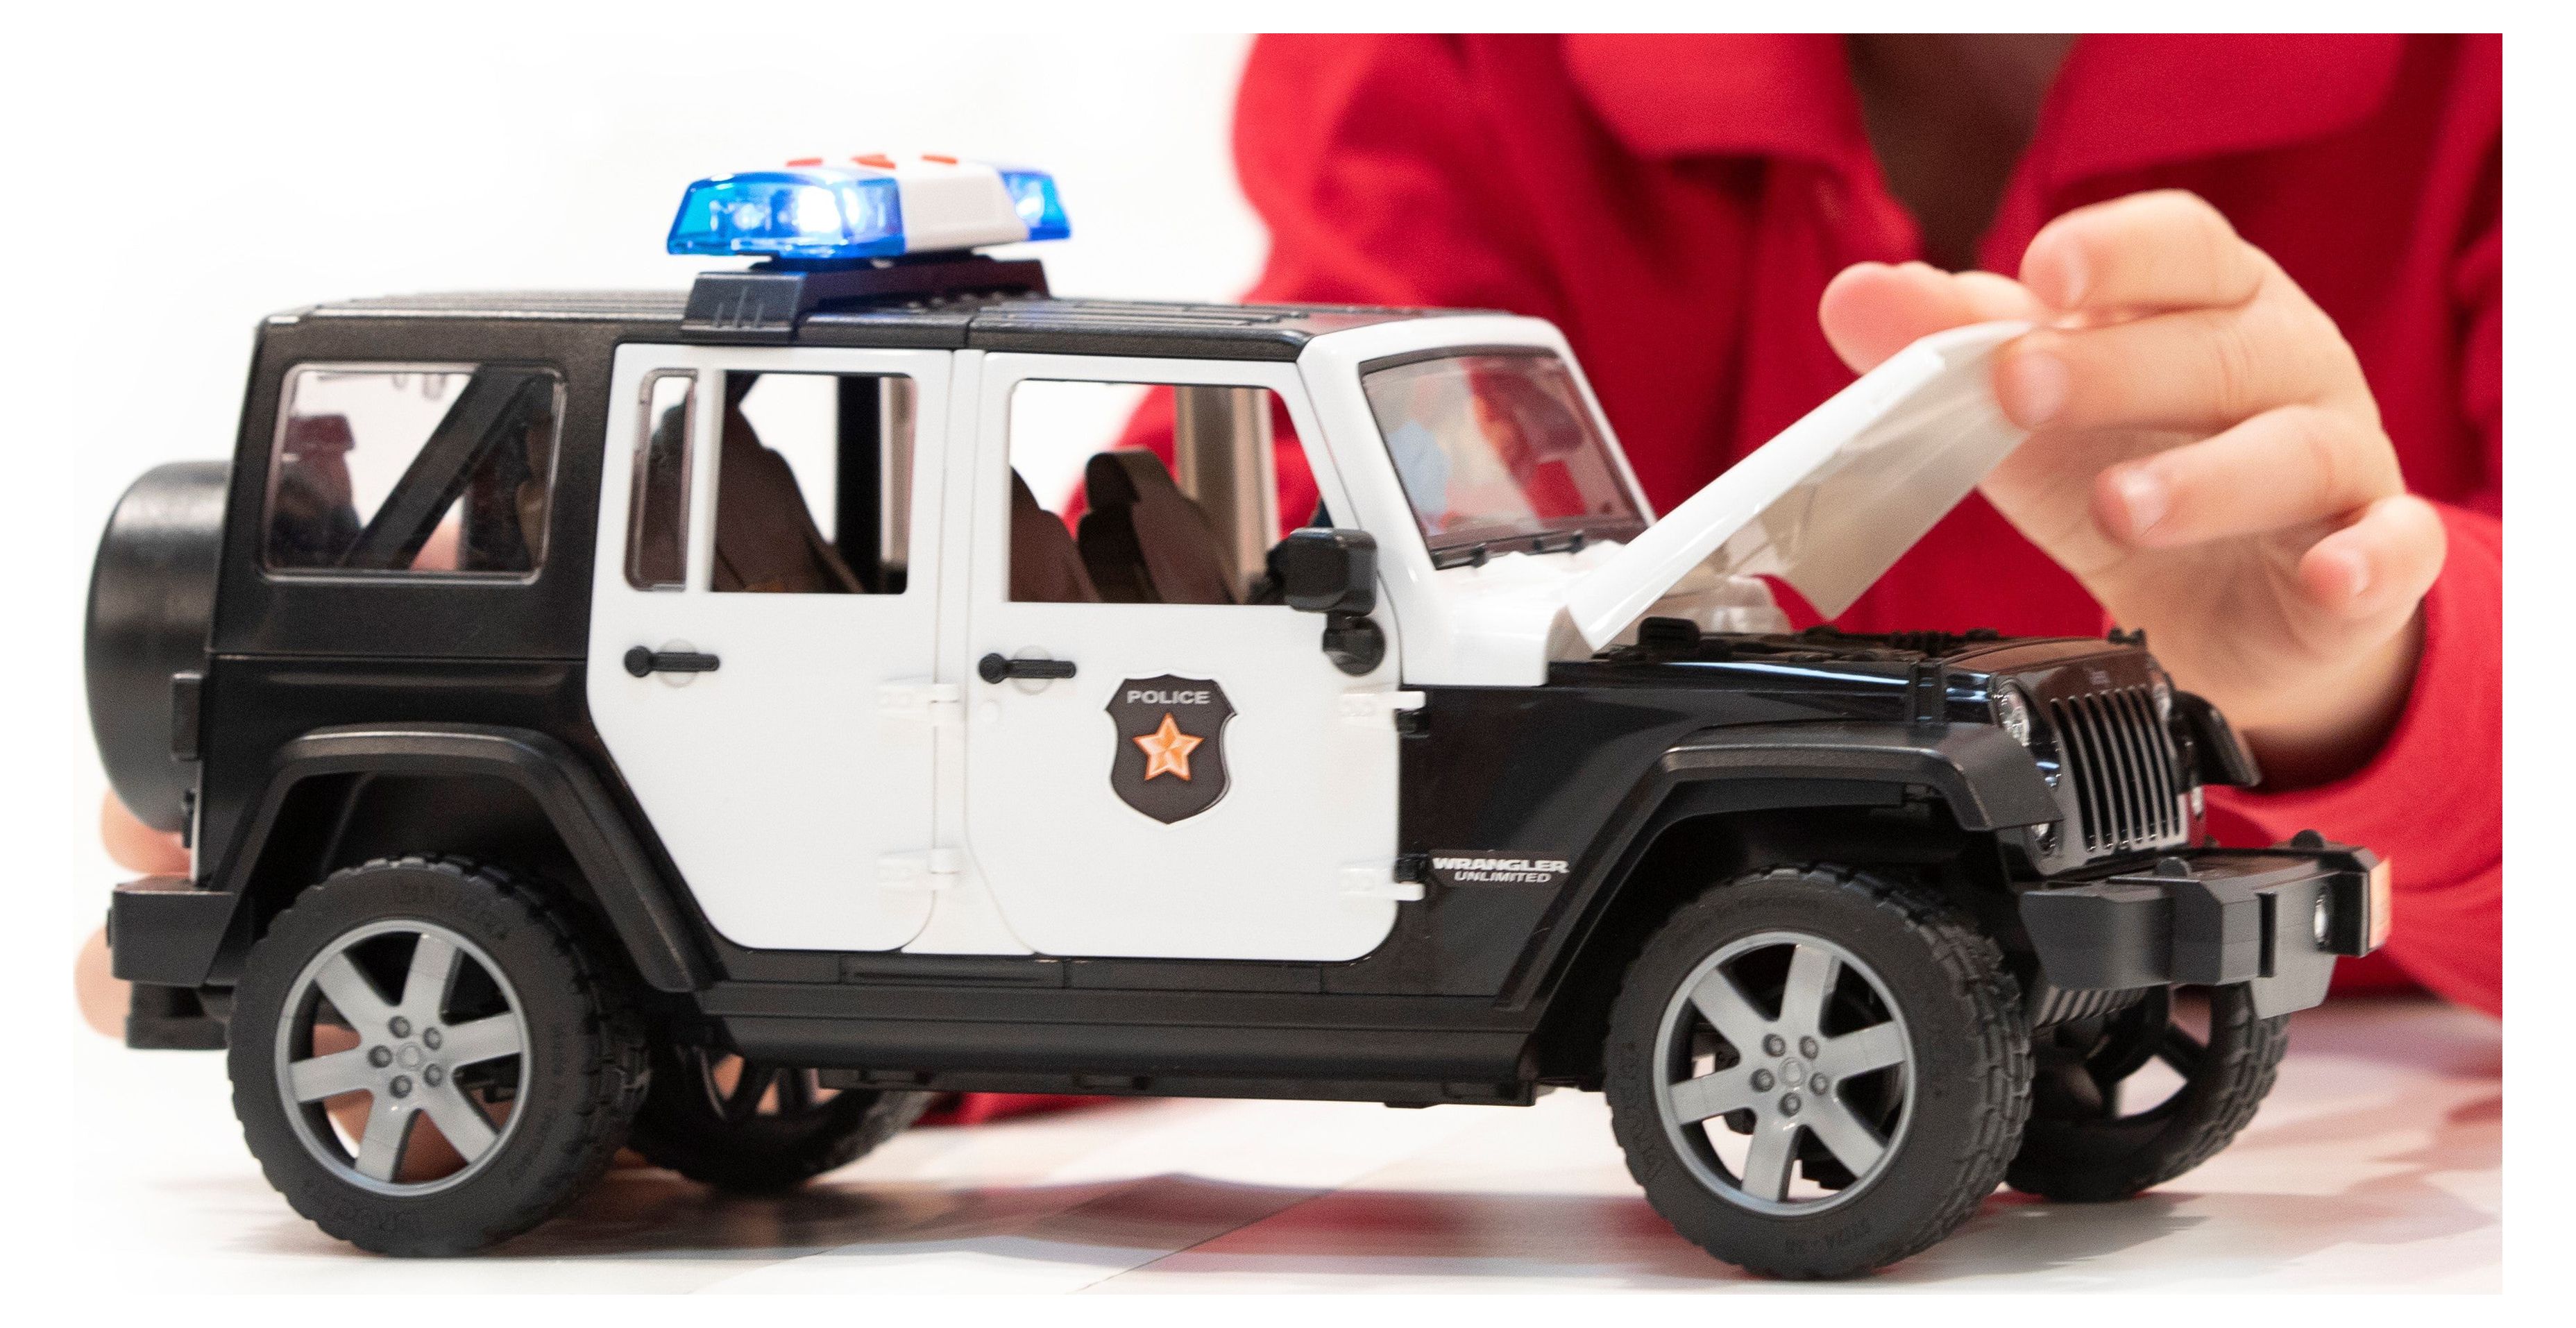 Bruder 02526 Jeep Rubicon Police Car + Light Skin Policeman - image 2 of 5